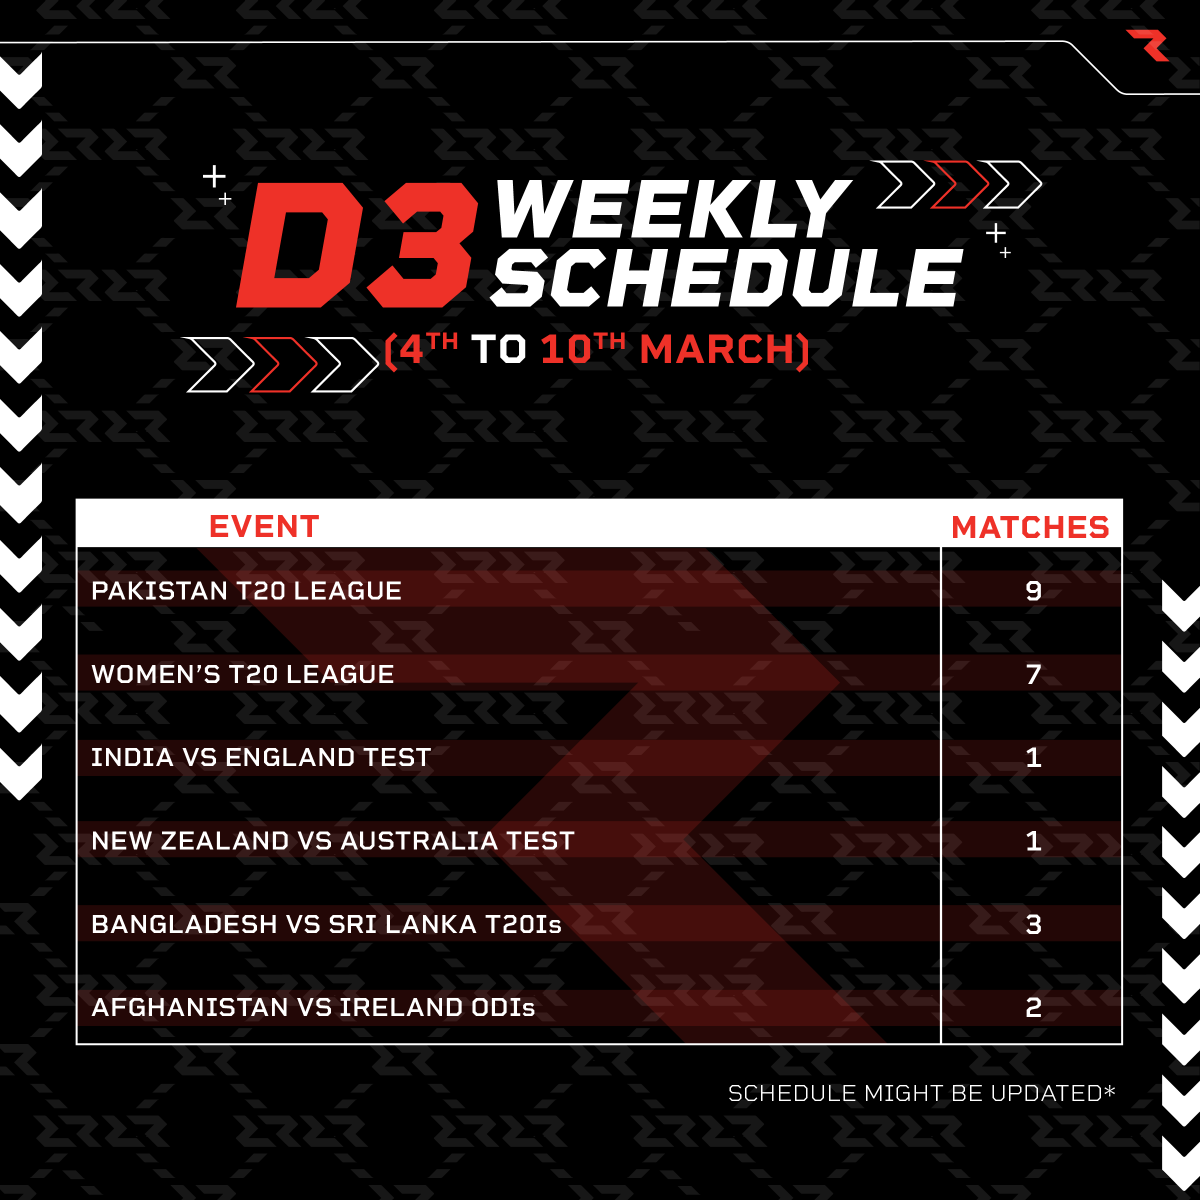 Plenty of cricket across formats this week on D3!😃